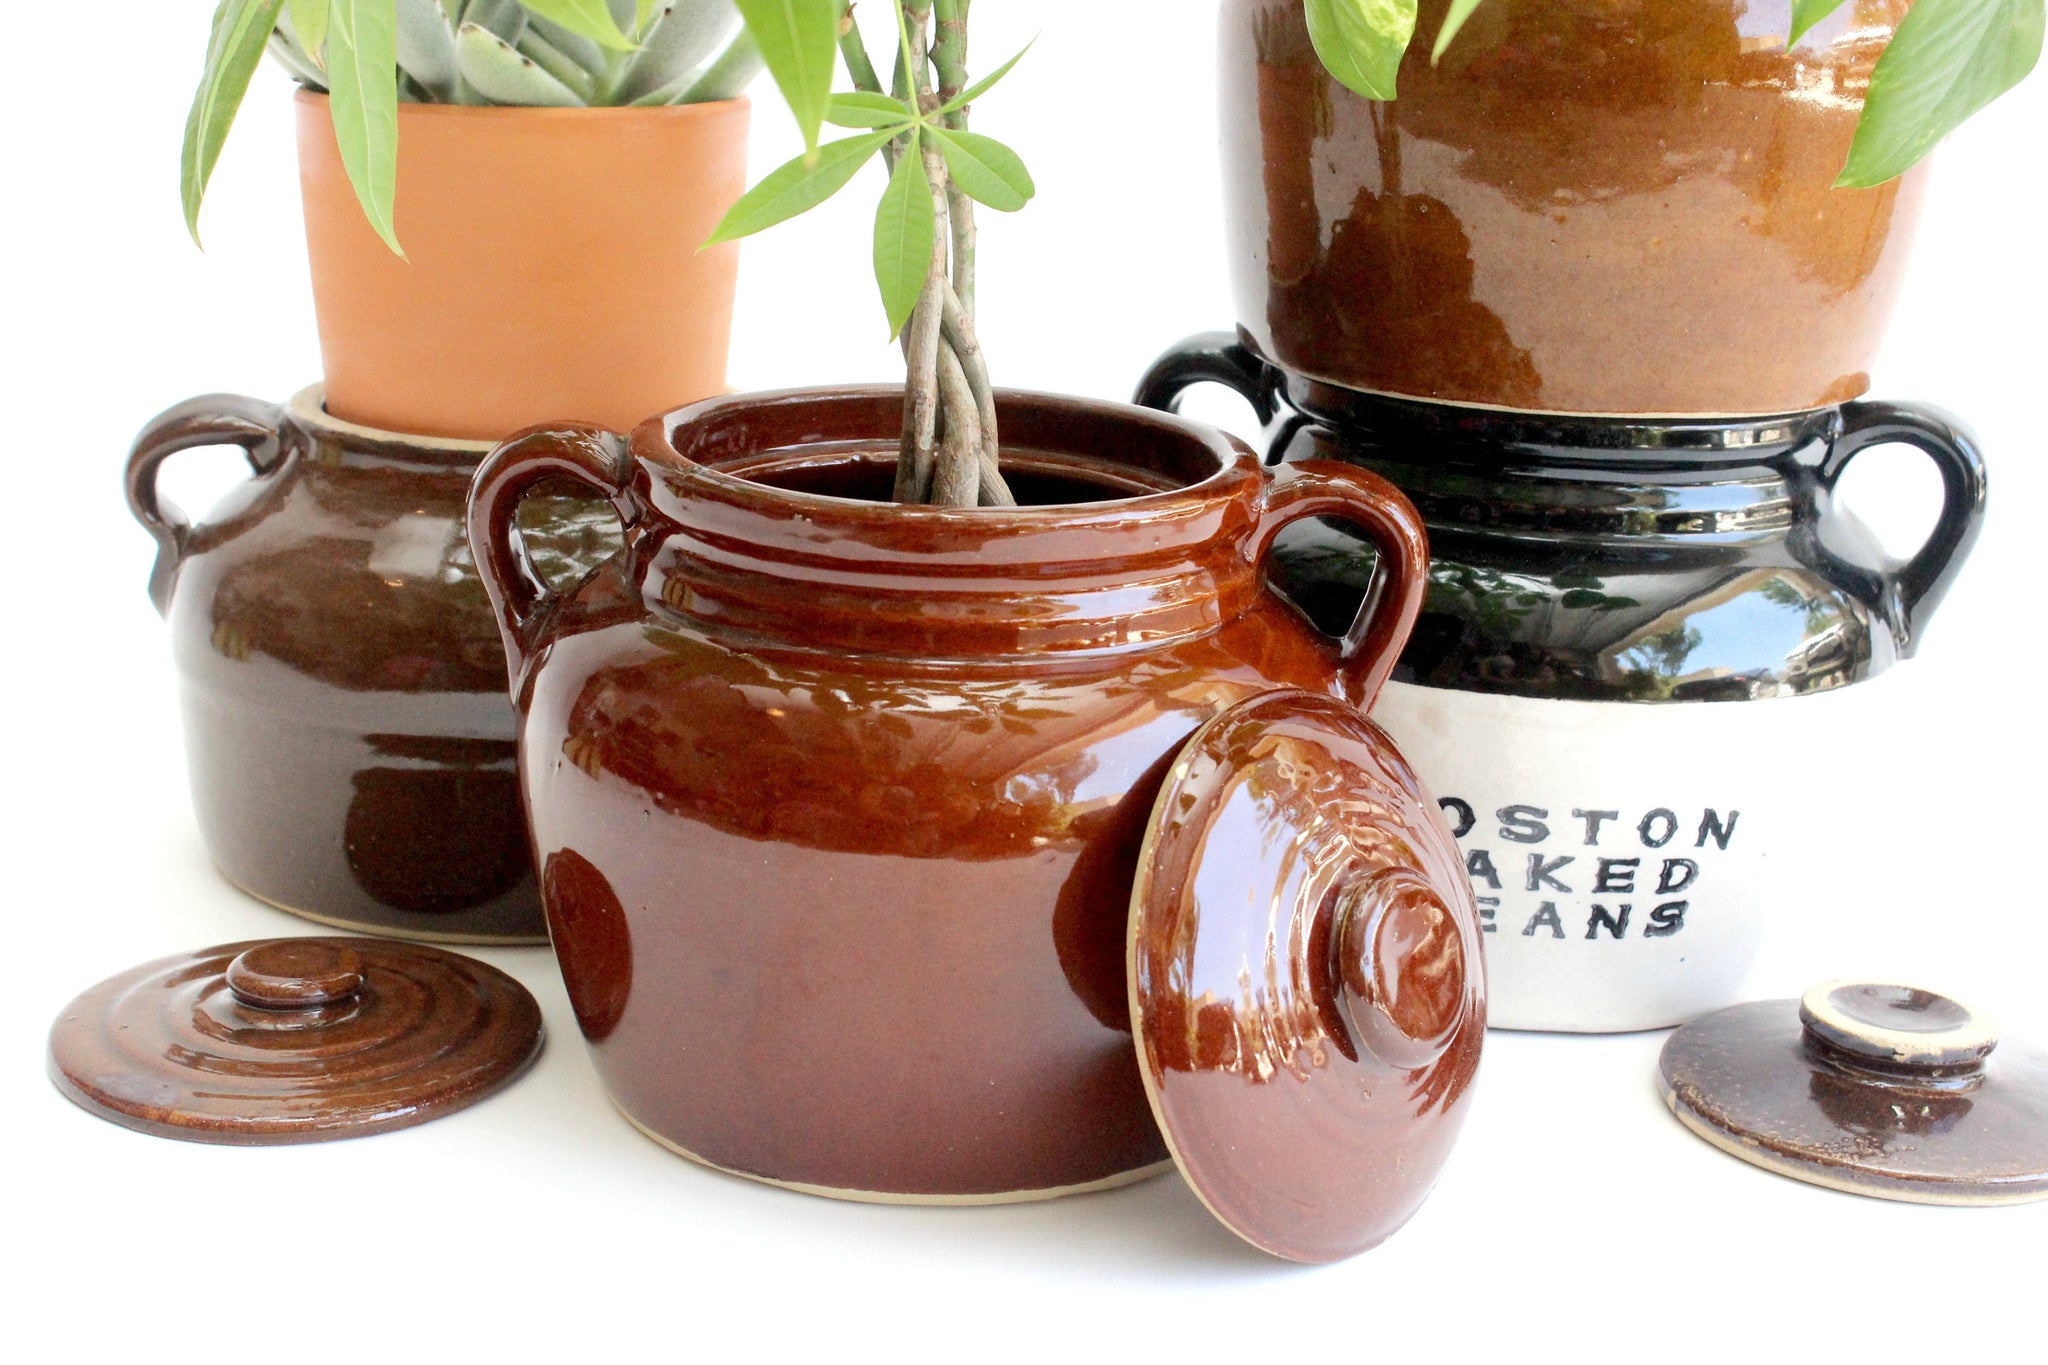 Ceramic Crock Pot Image & Photo (Free Trial)